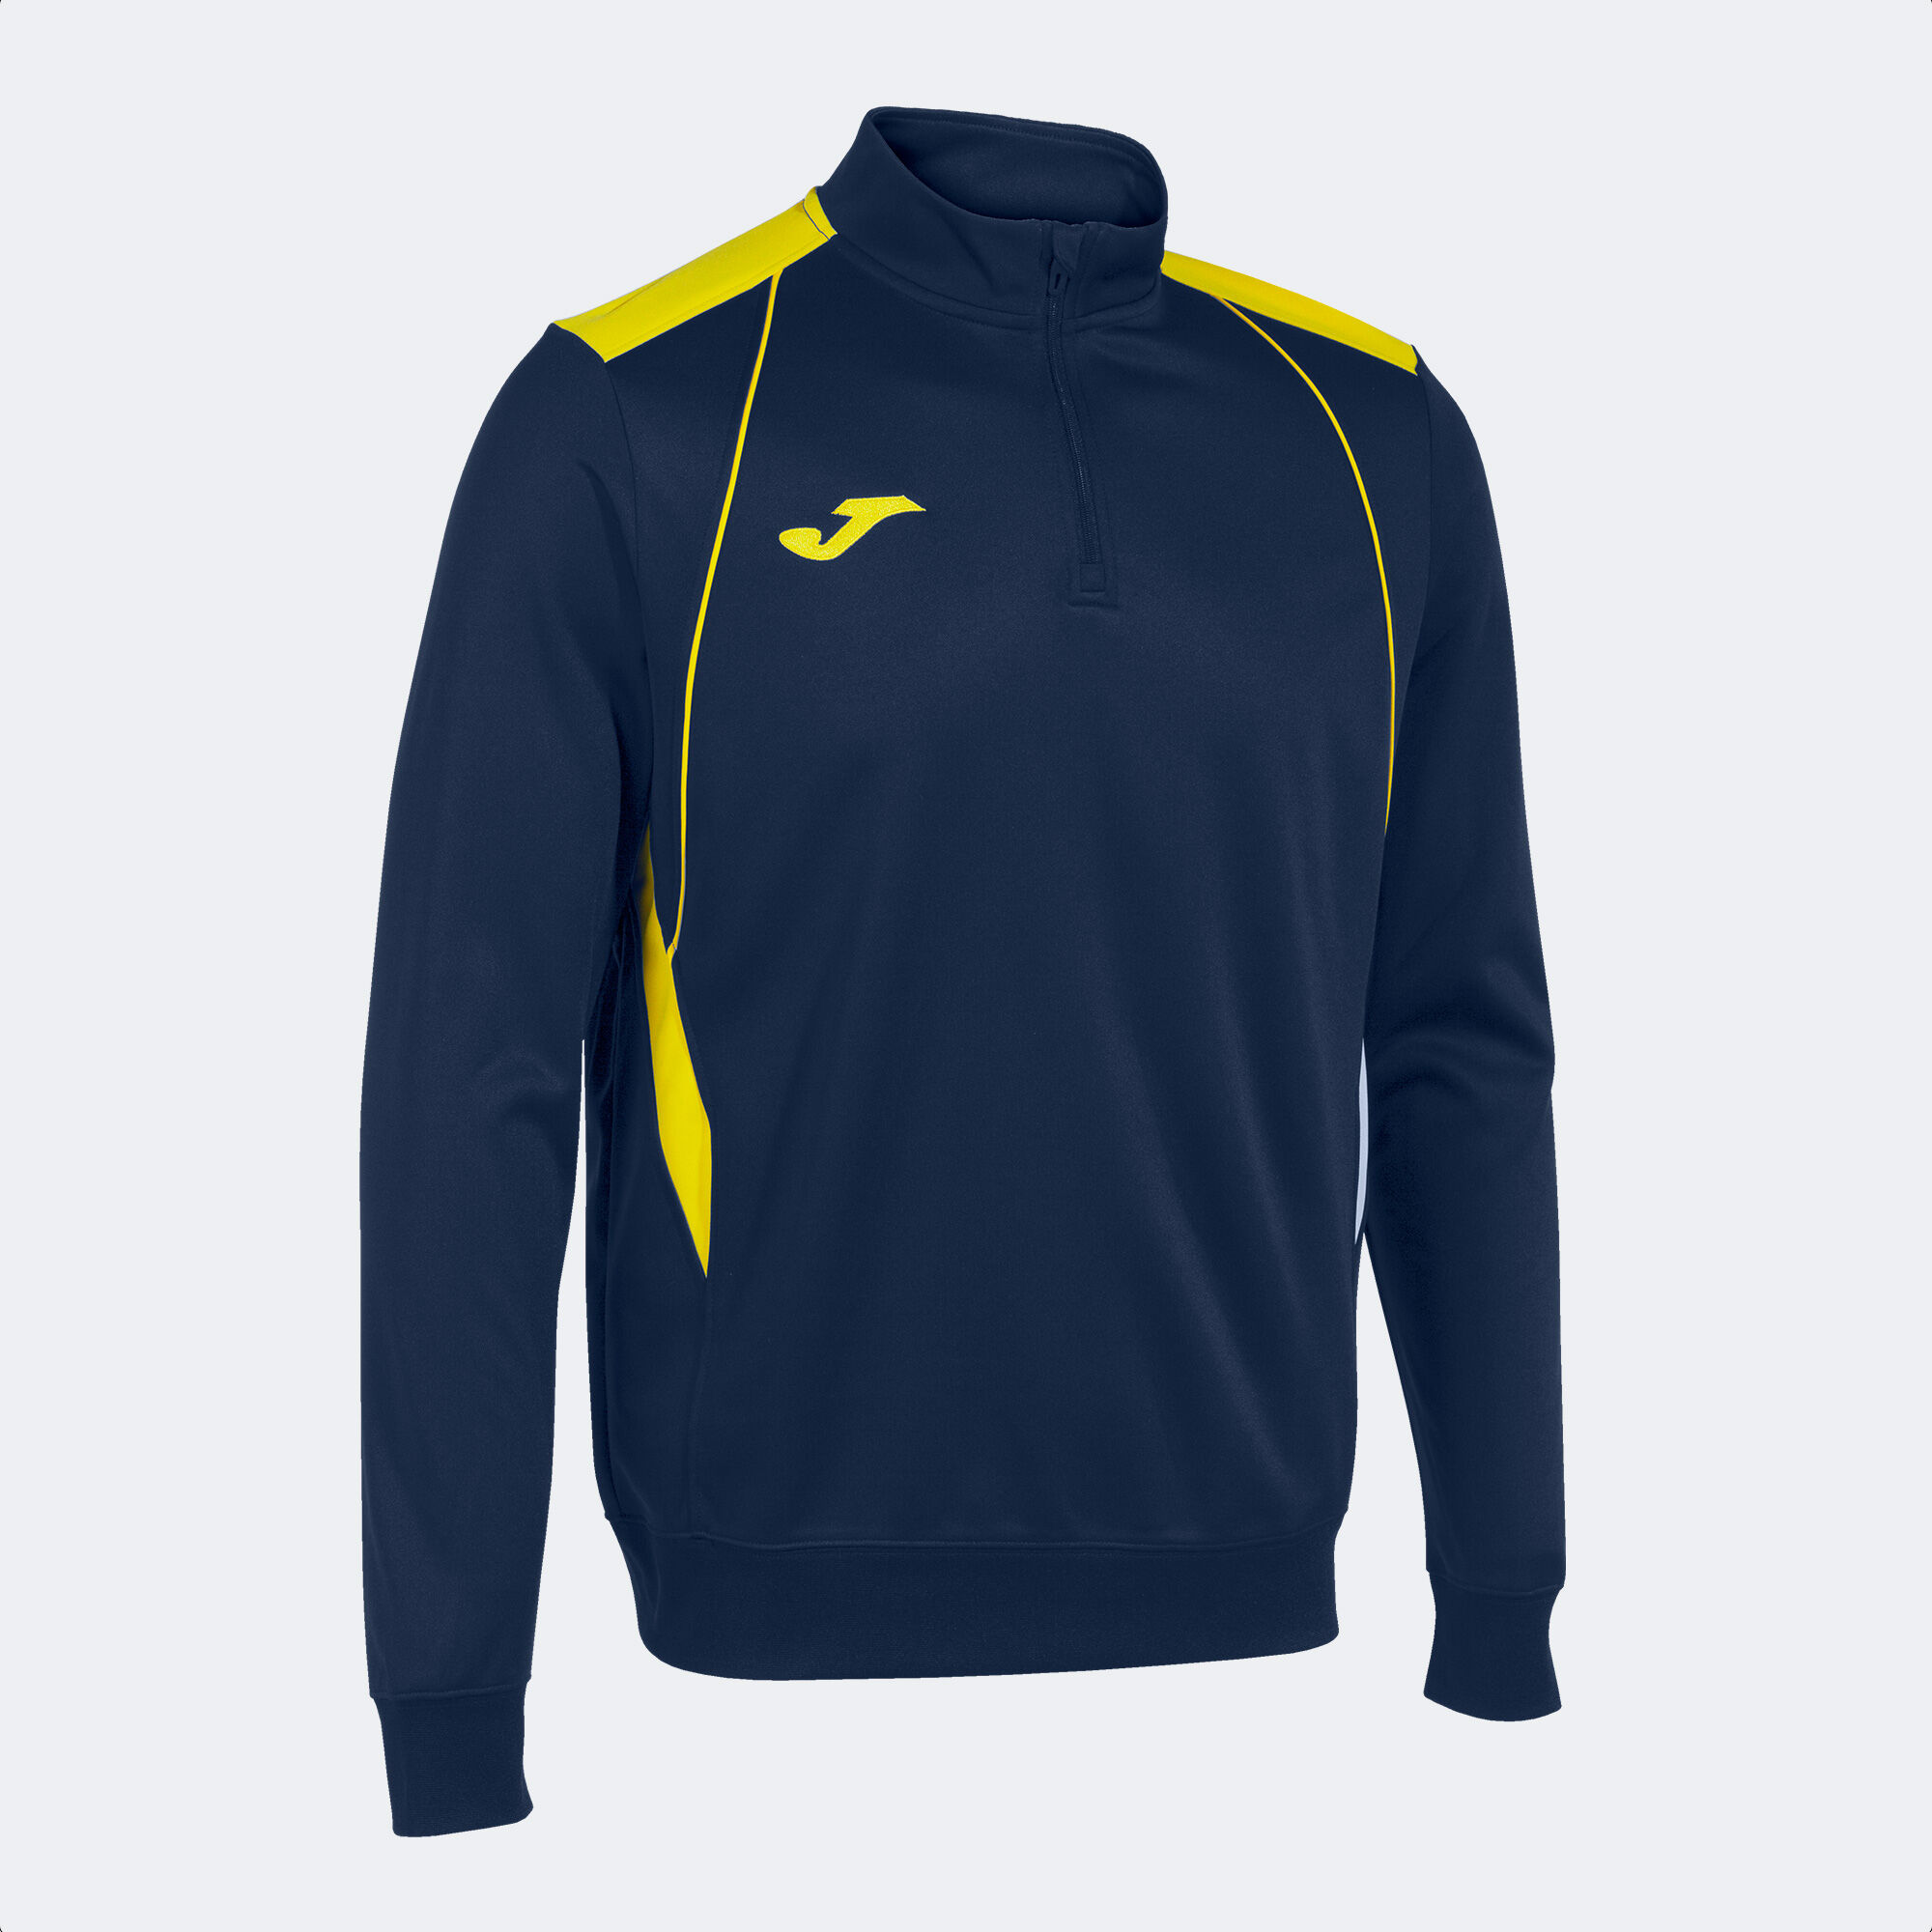 Sweat-shirt homme Championship VII bleu marine jaune